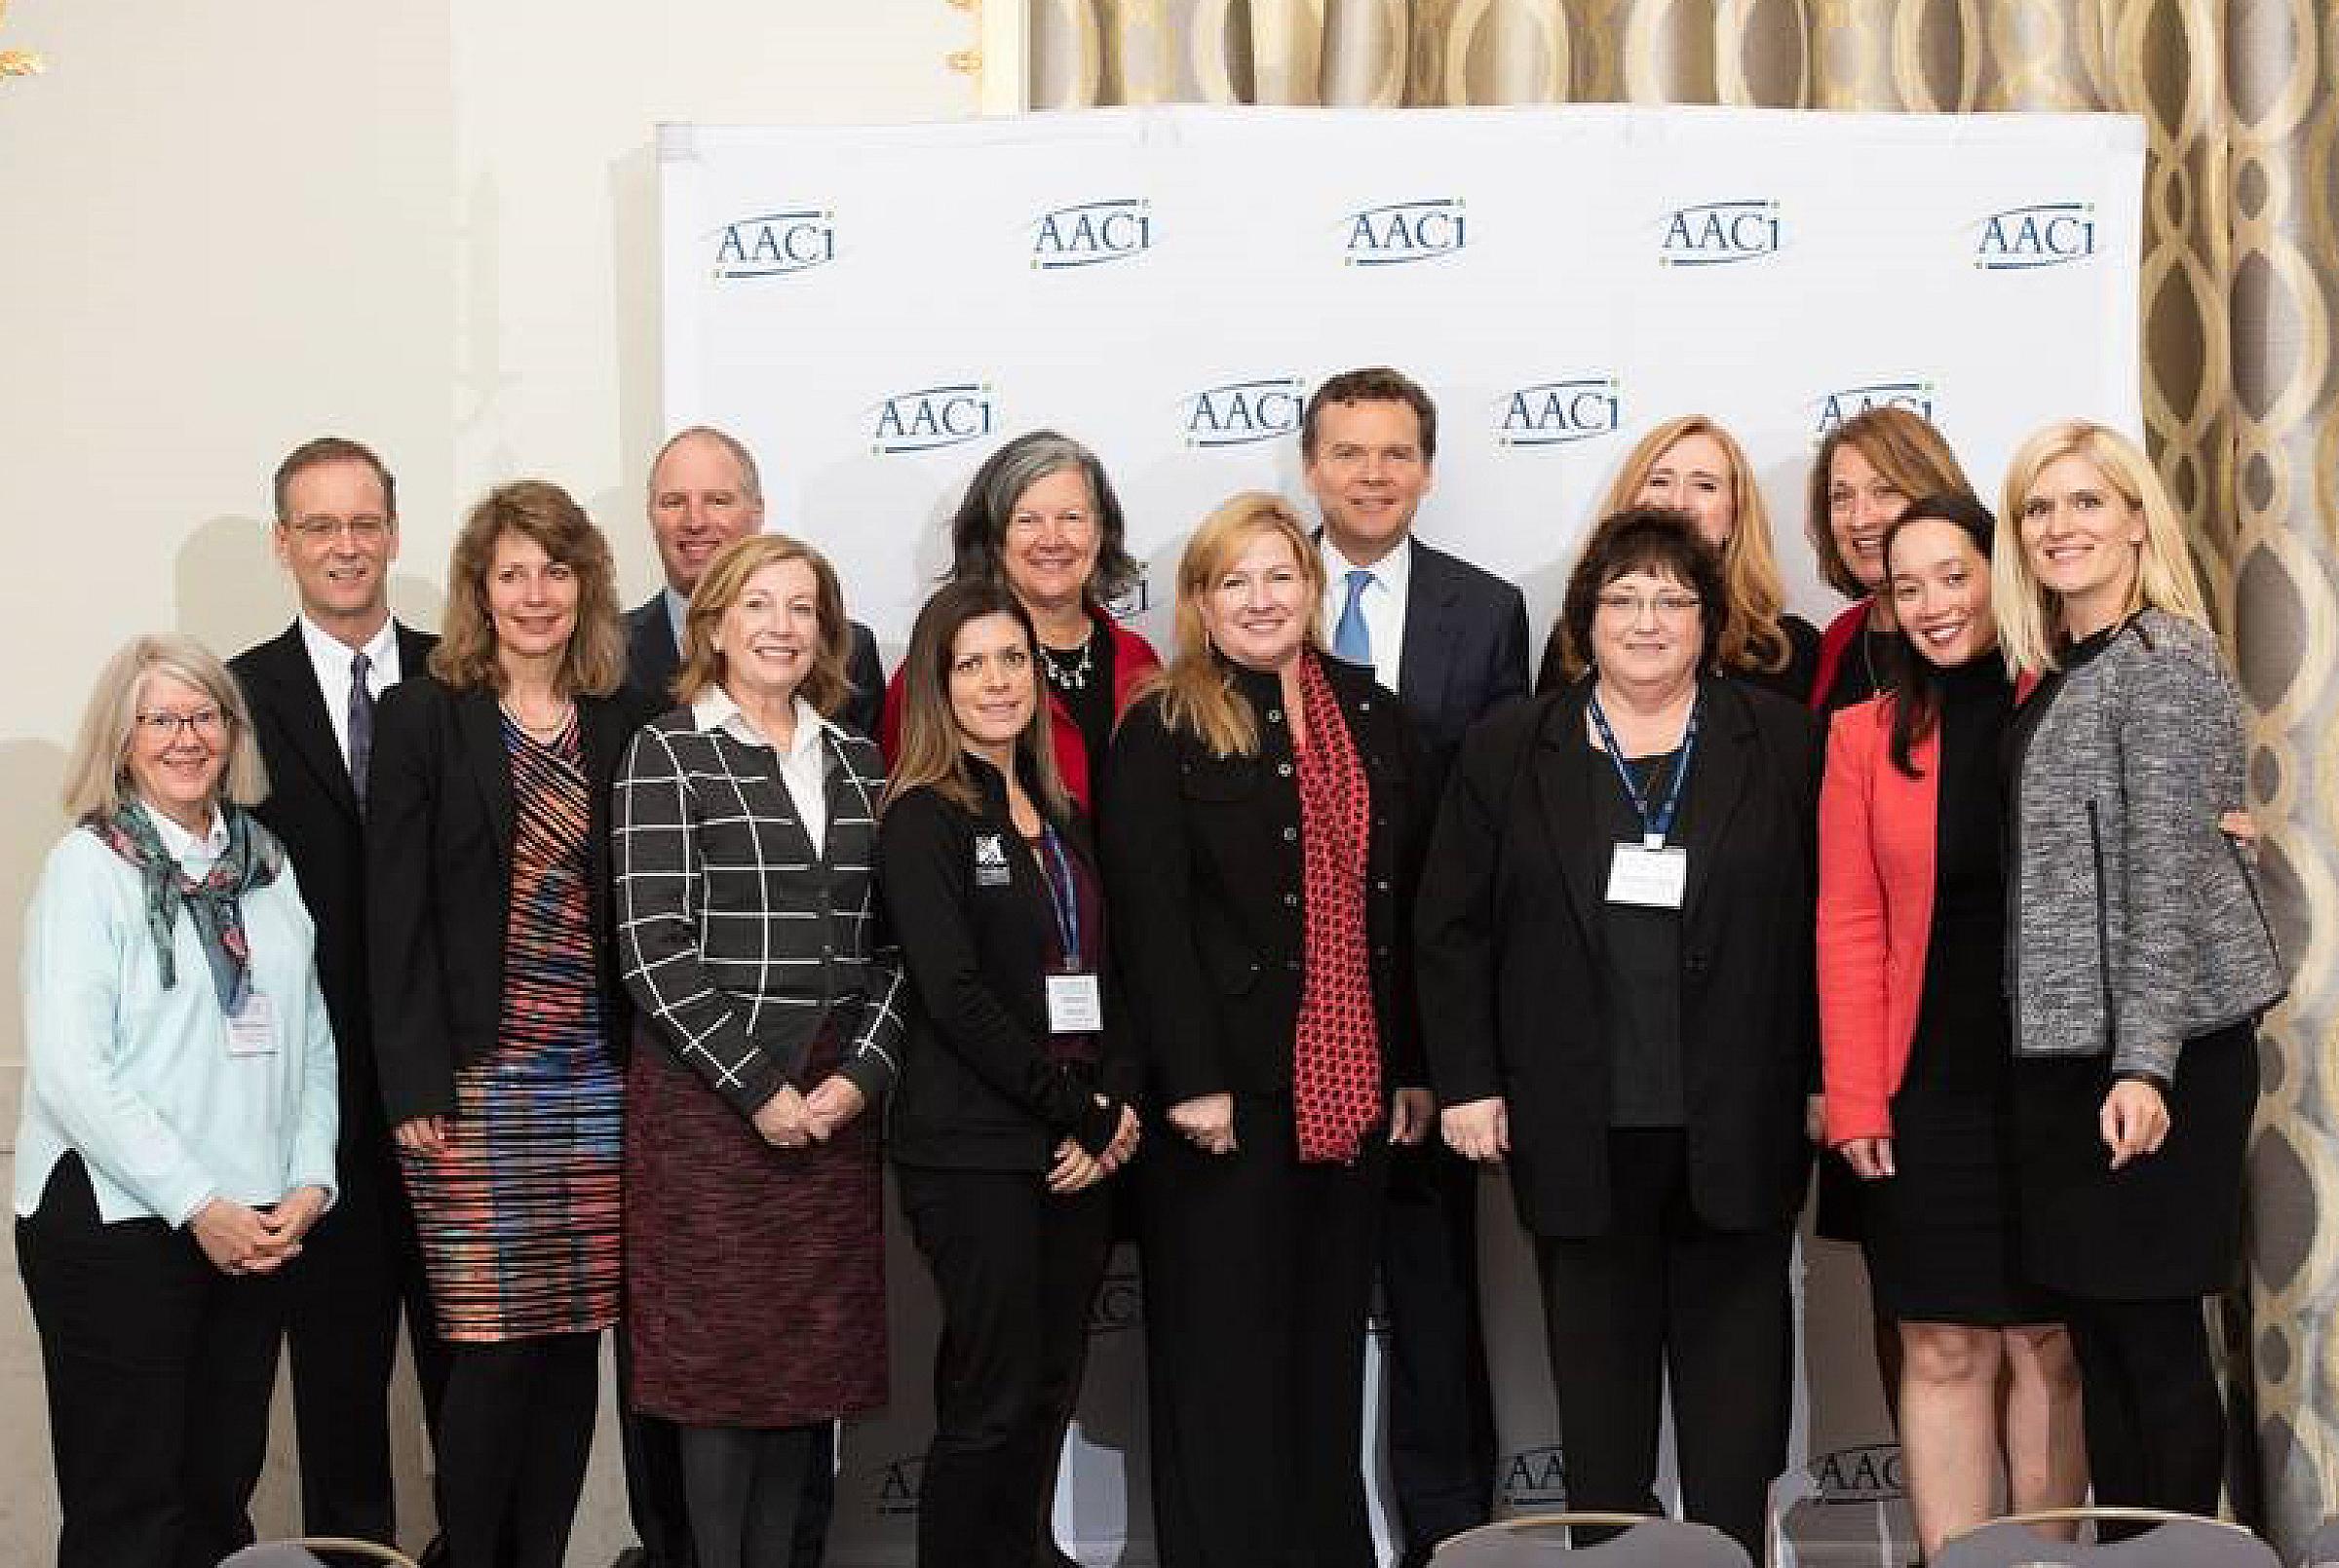 AACI award group photo